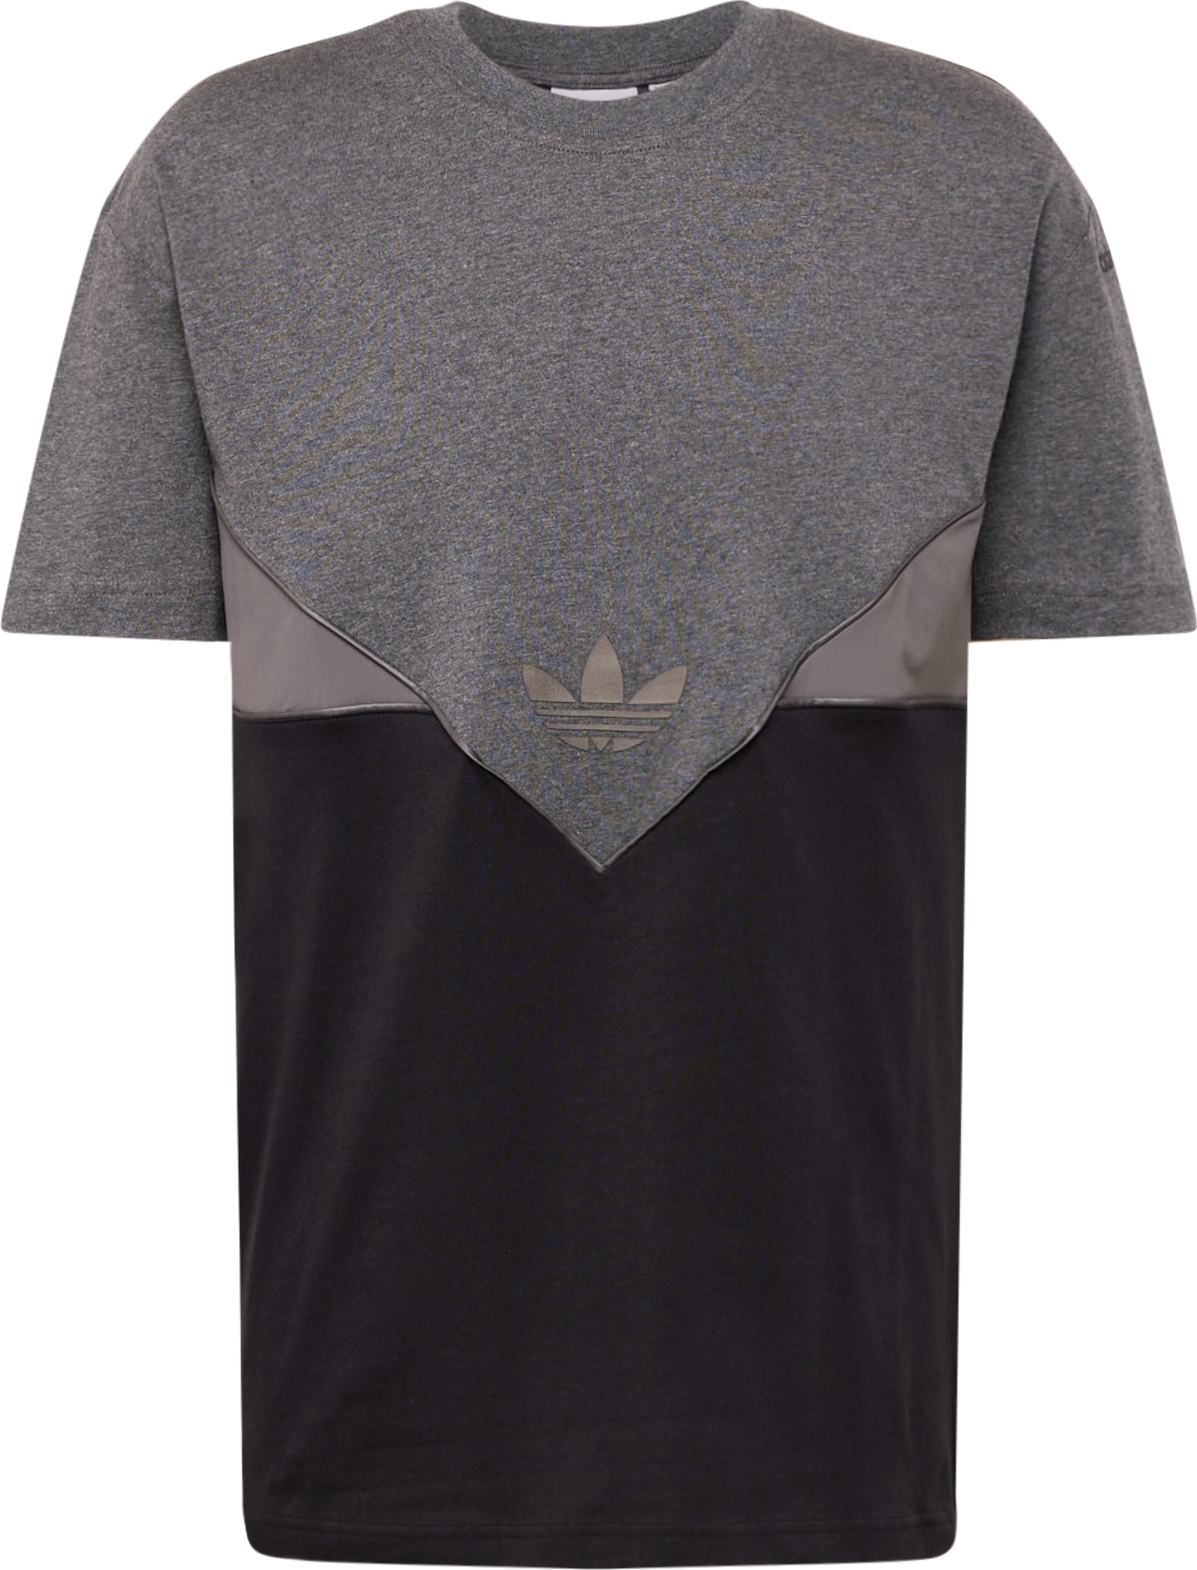 Tričko 'Adicolor Seasonal Reflective' adidas Originals stříbrně šedá / šedý melír / černá